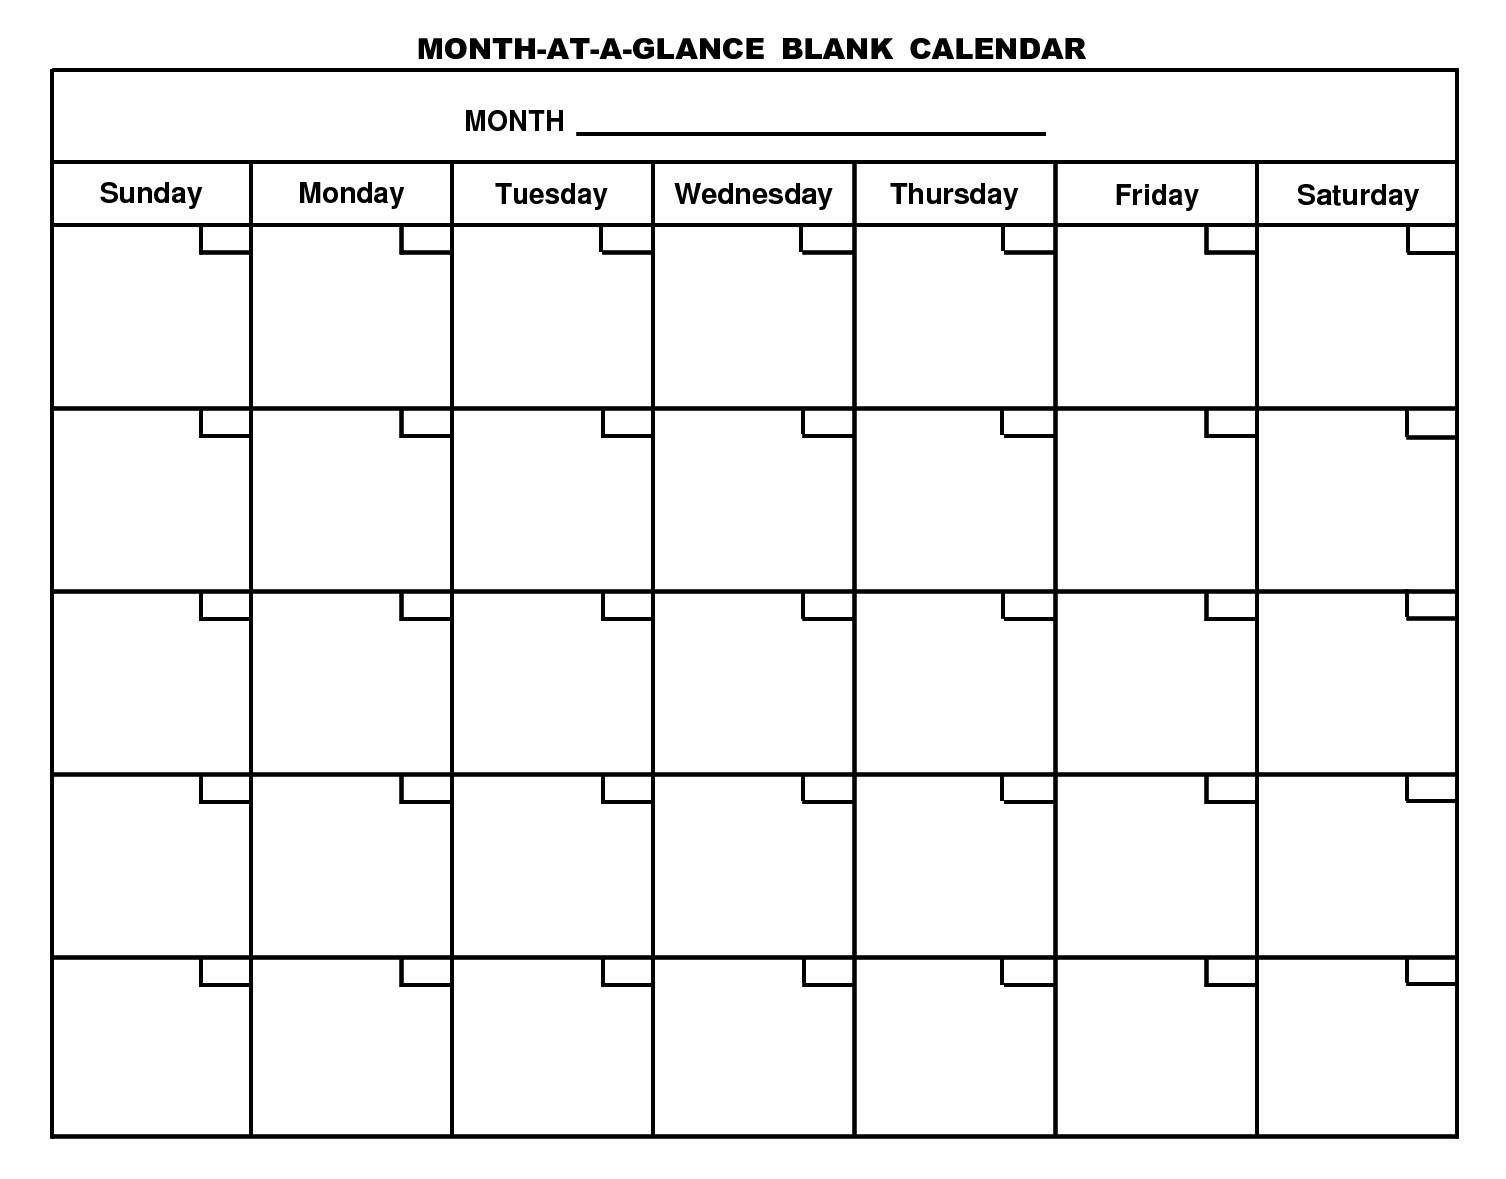 Month At A Glance Blank Calendar Printable | Monthly With Month At A Glance Blank Calendar Template